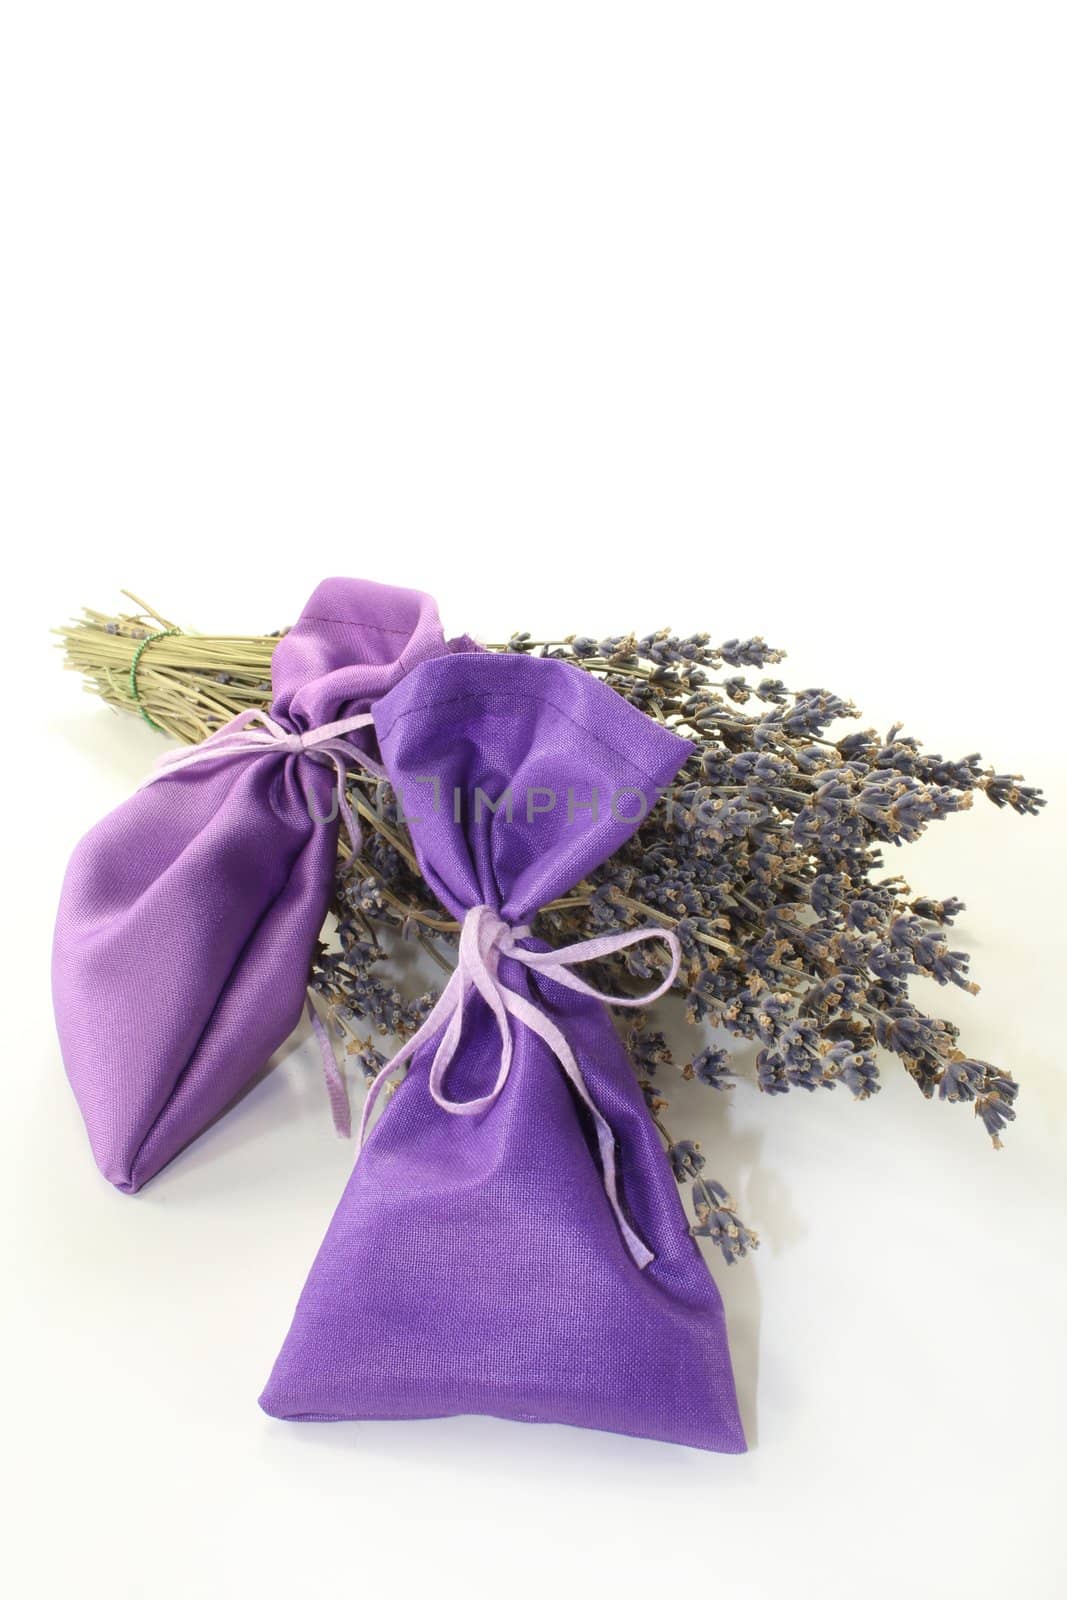 lavender bag by silencefoto